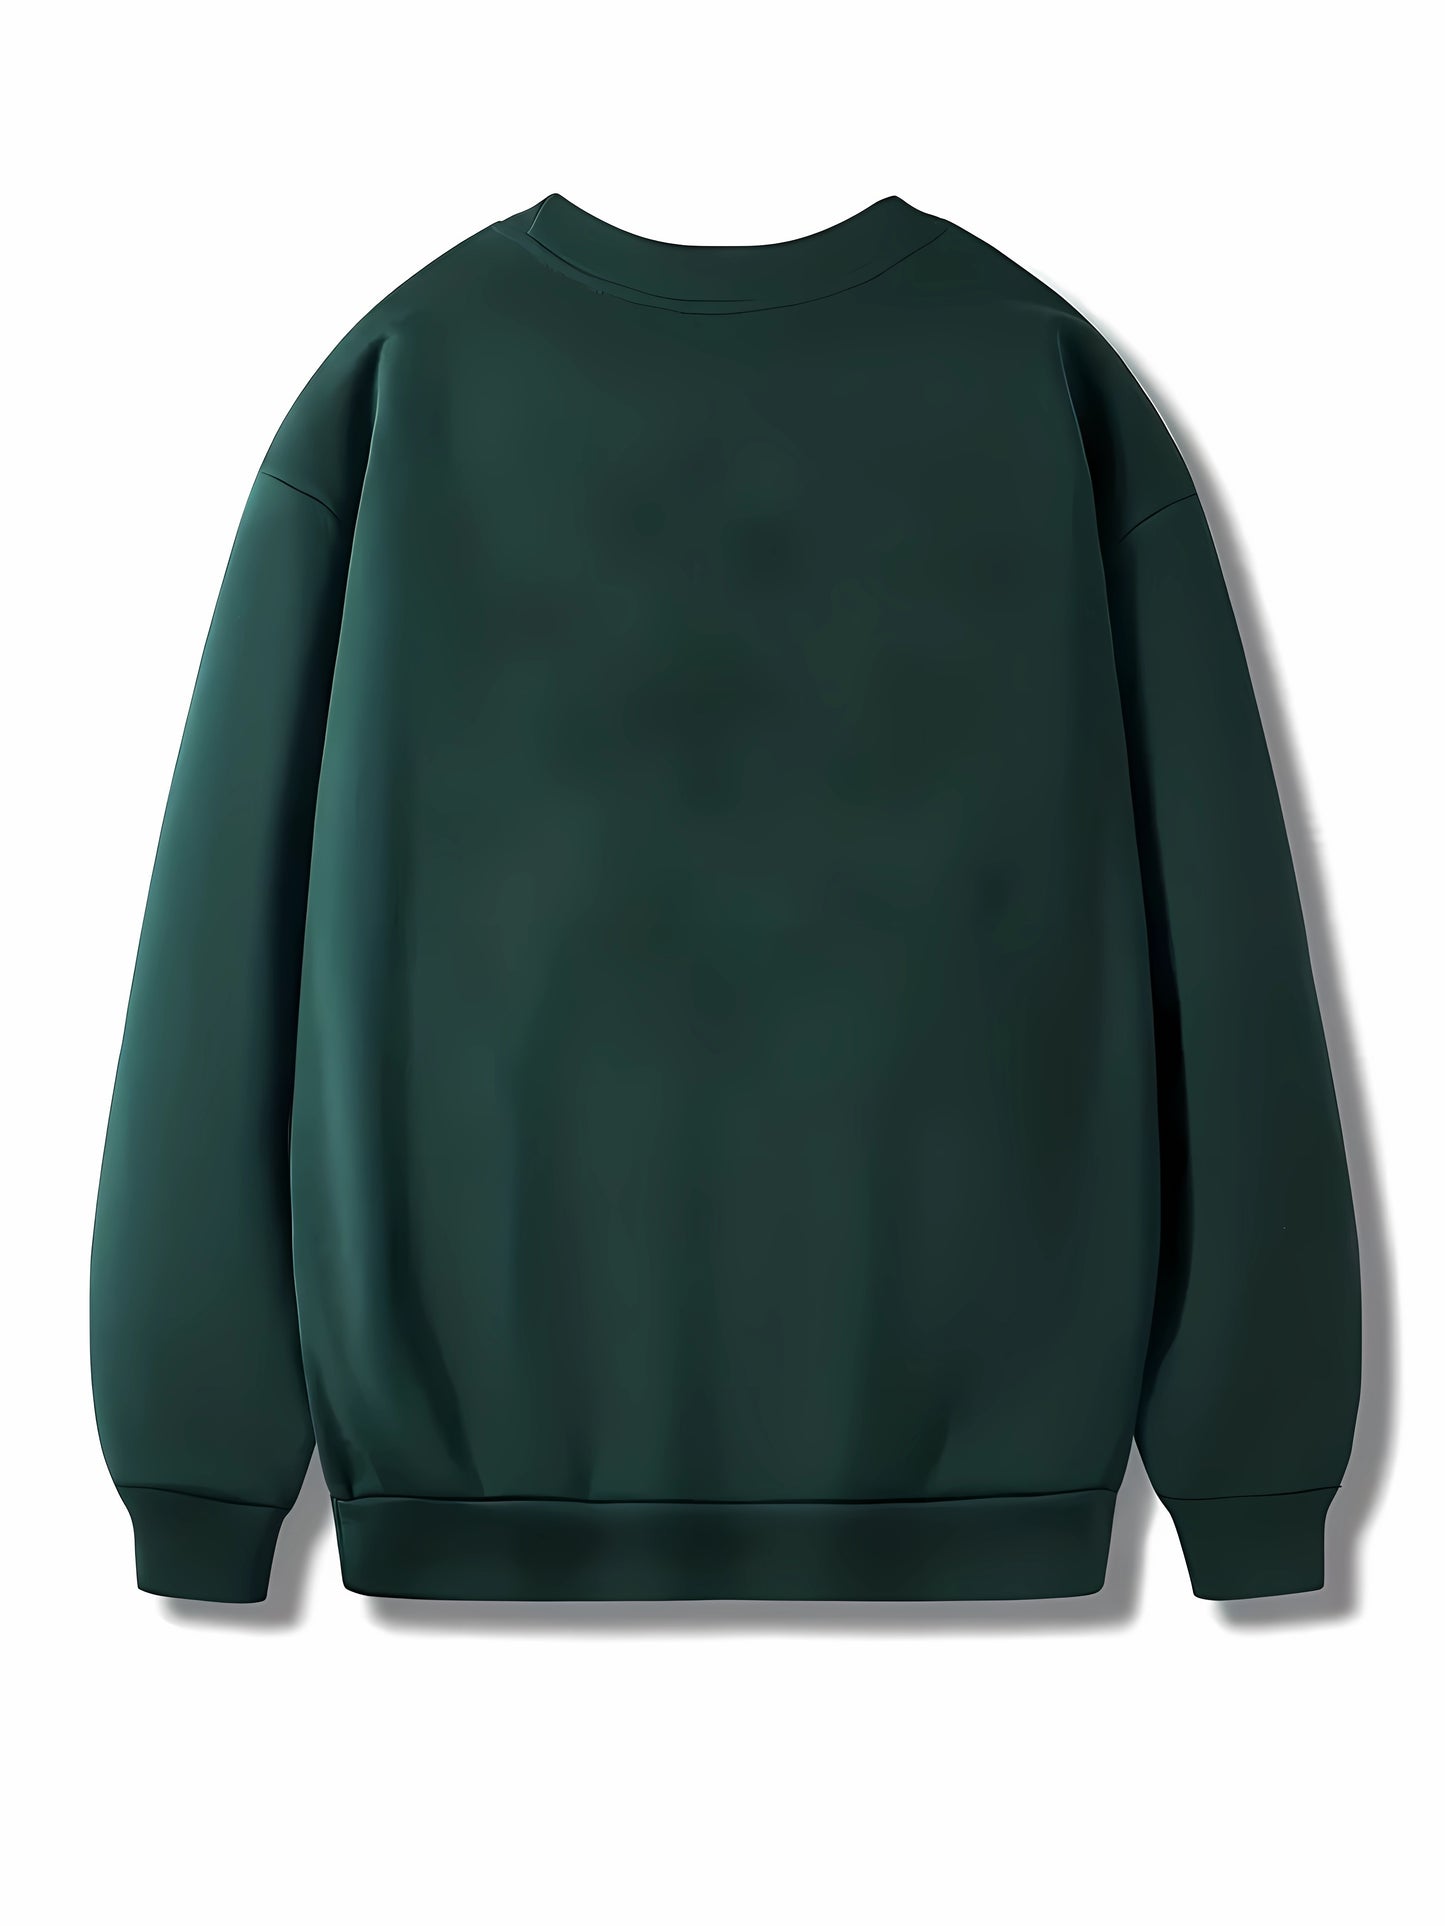 Cute Dog Print Trendy Sweatshirt, Men's Casual Graphic Design Slightly Stretch Crew Neck Pullover Sweatshirt For Autumn Winter